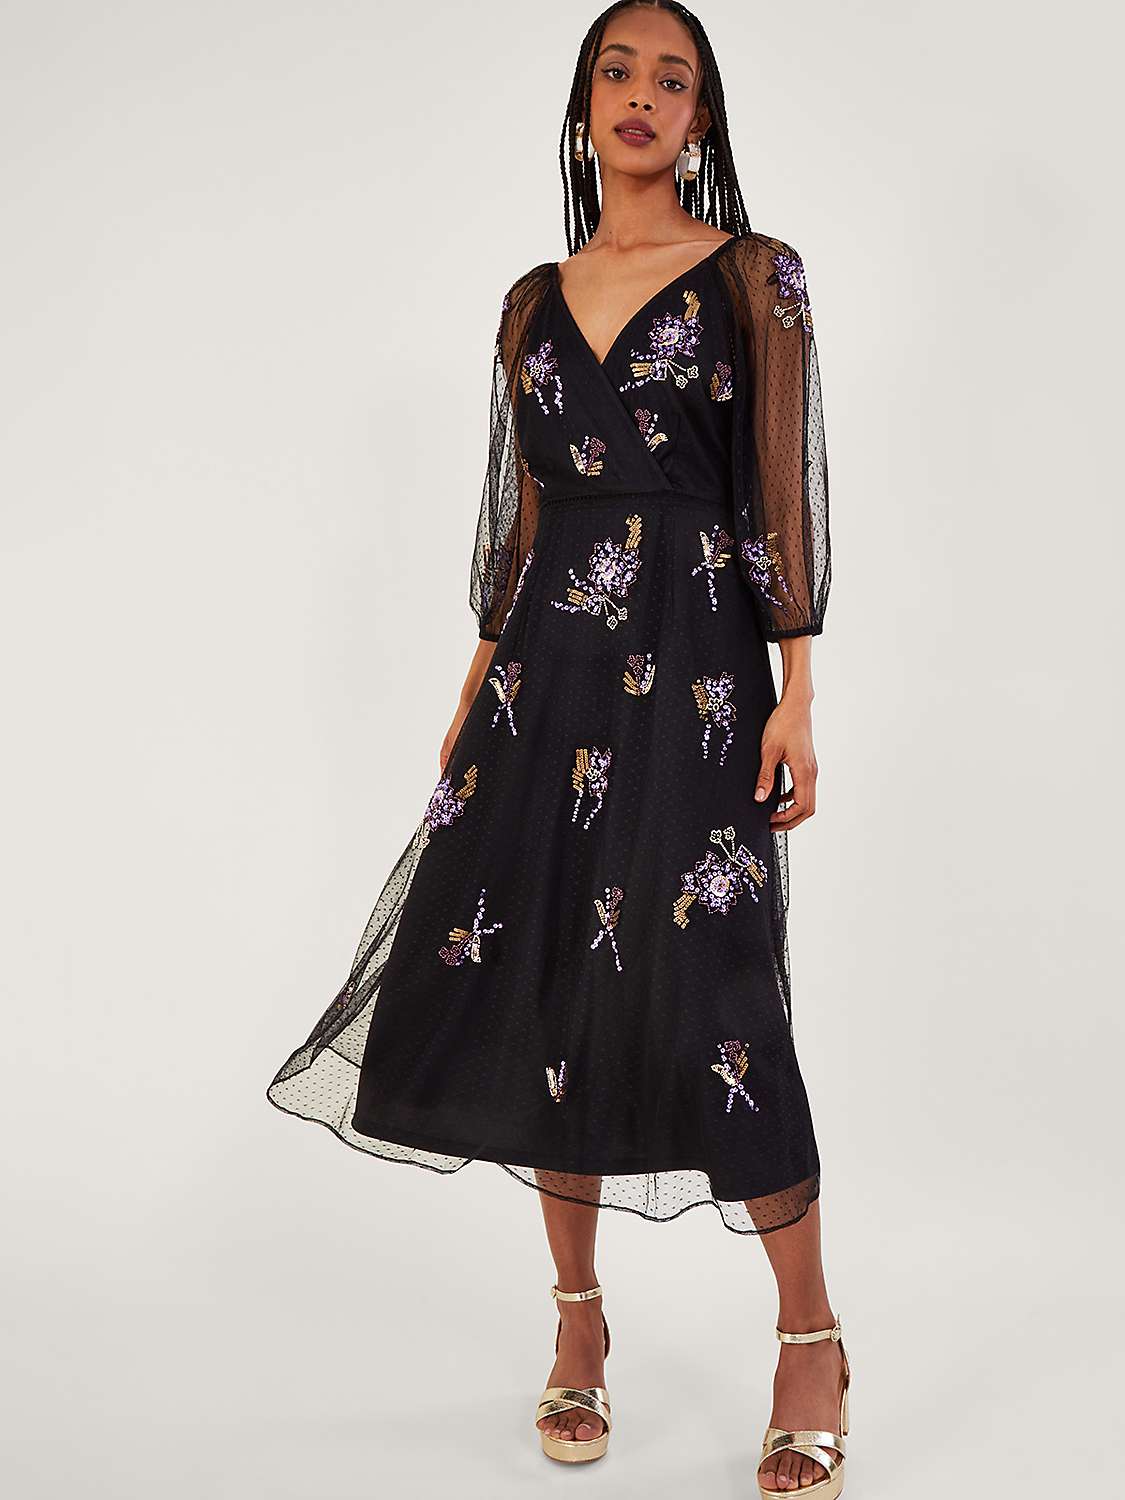 Monsoon Eloise Embellished Midi Dress, Black/Multi at John Lewis & Partners